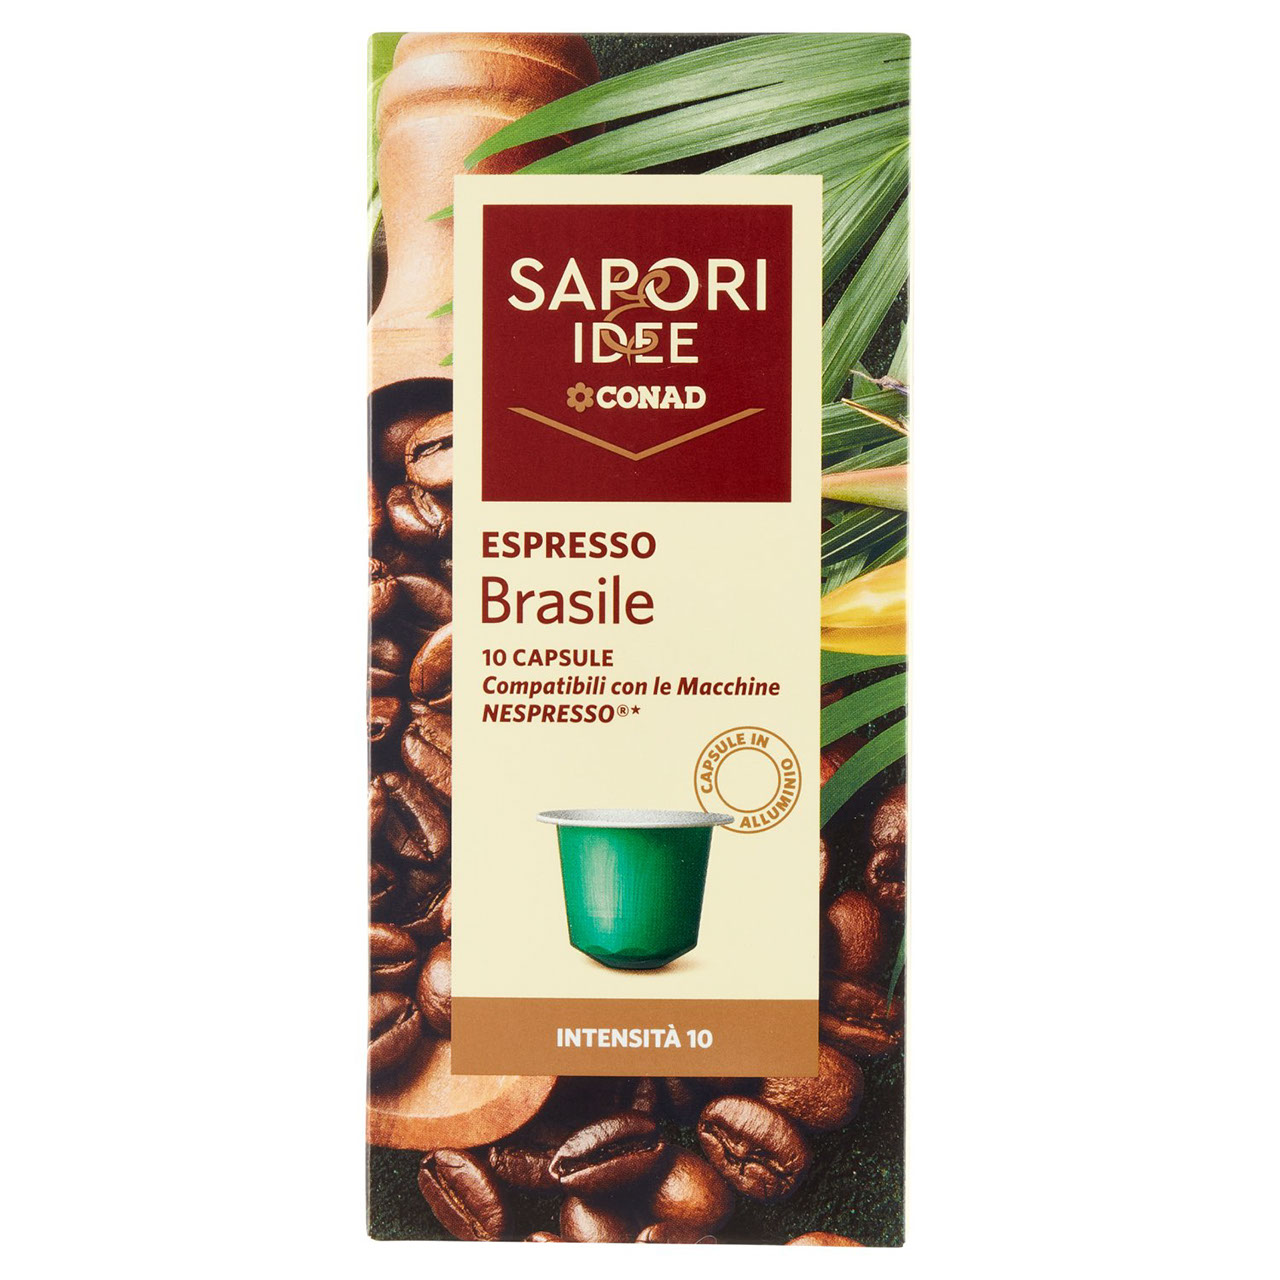 Espresso Brasile Capsule Compatibili Nespresso